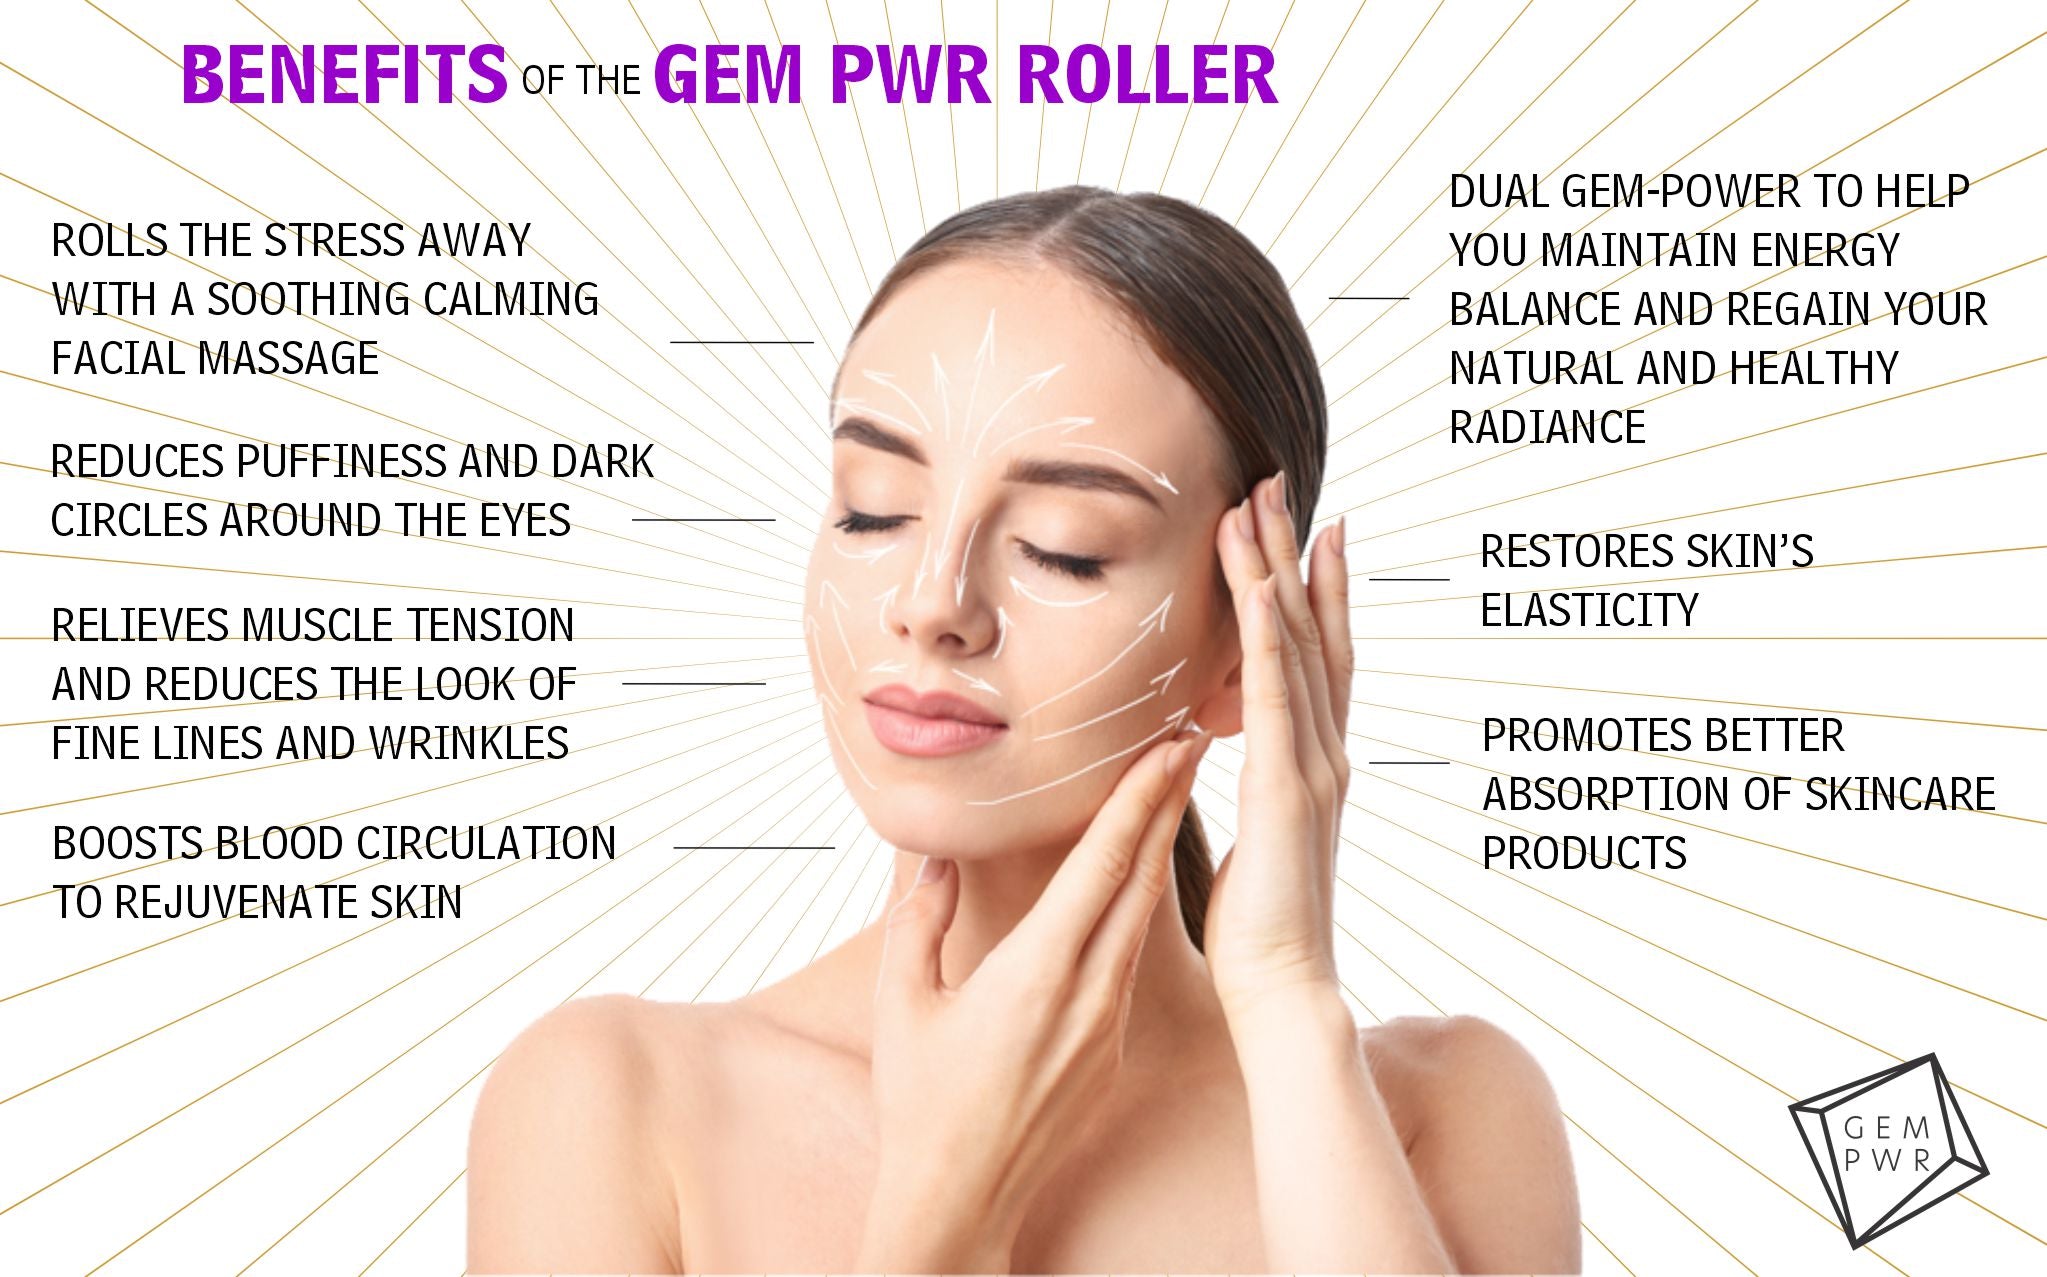 Benefits of the GEM PWR Roller